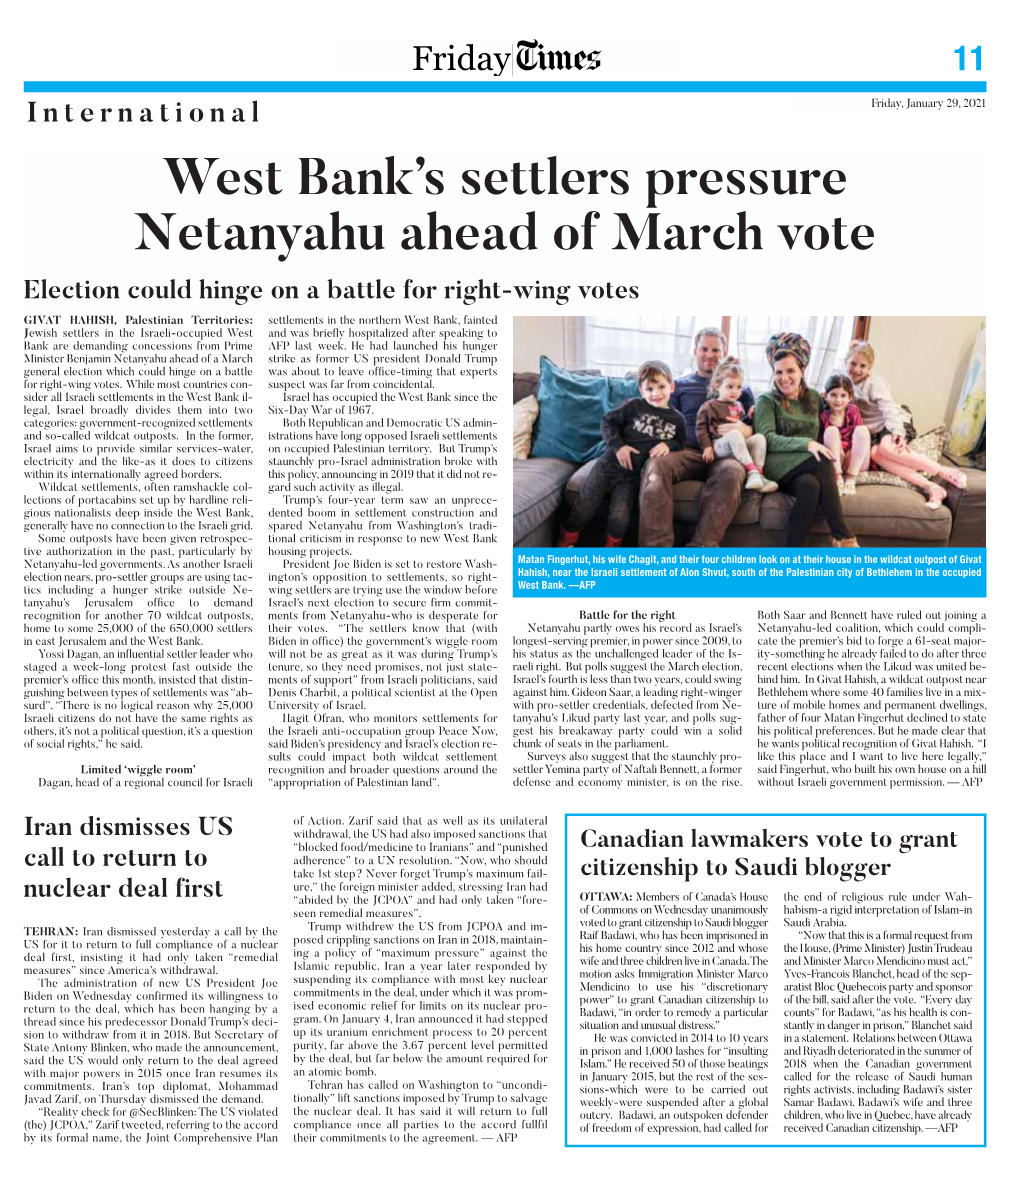 West Bank's Settlers Pressure Netanyahu Ahead of March Vote